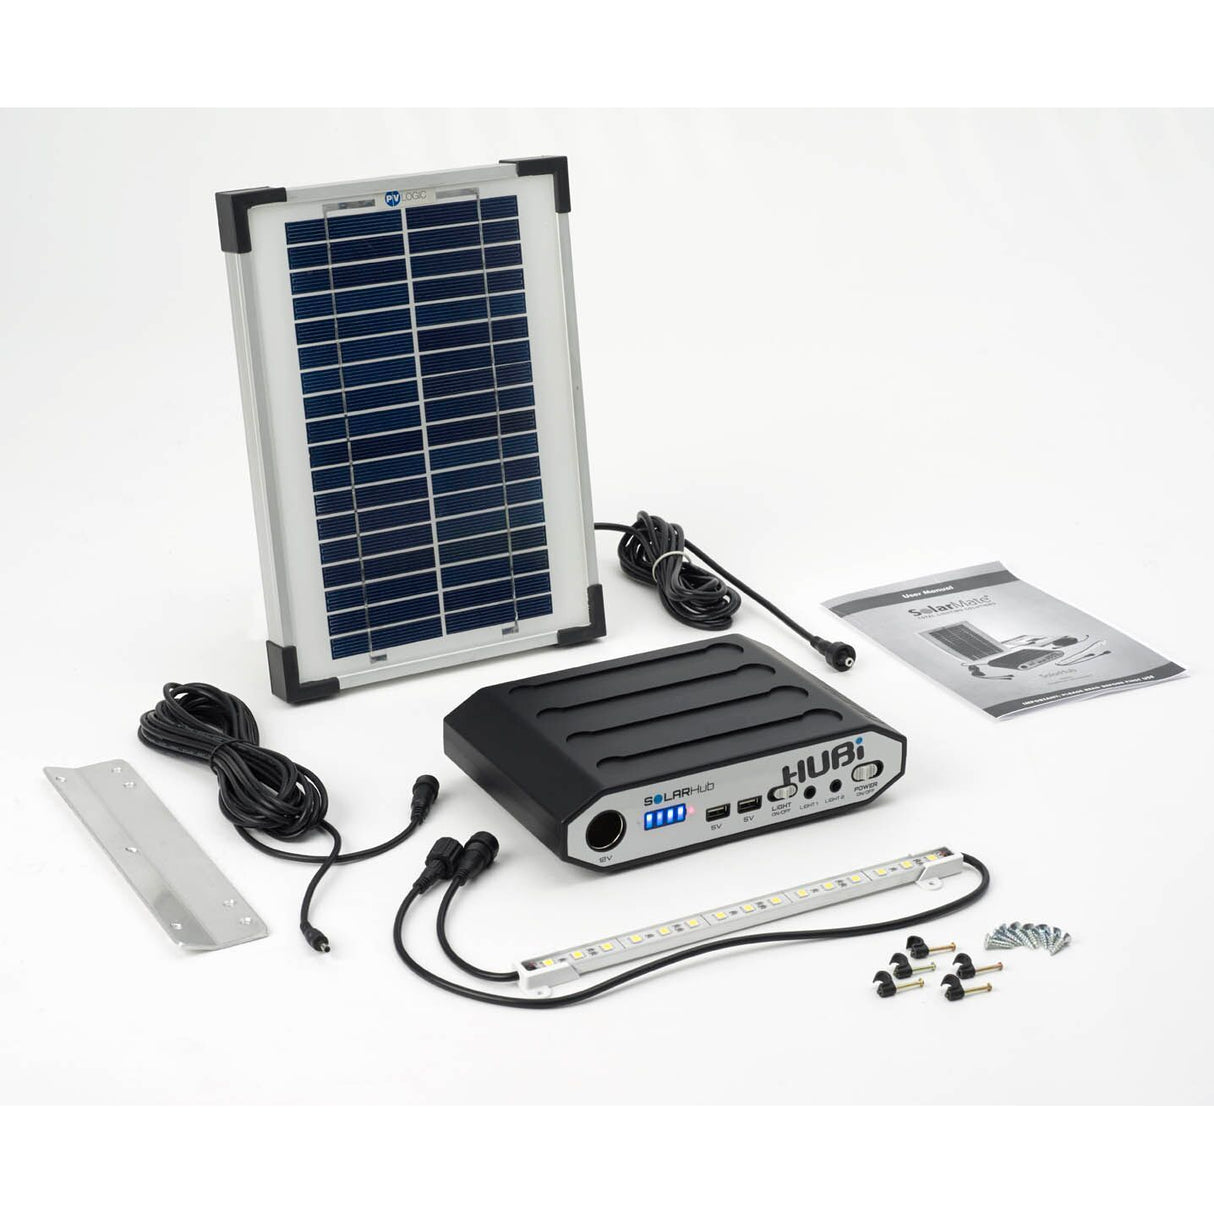 Solar Hub 16 Complete Kit